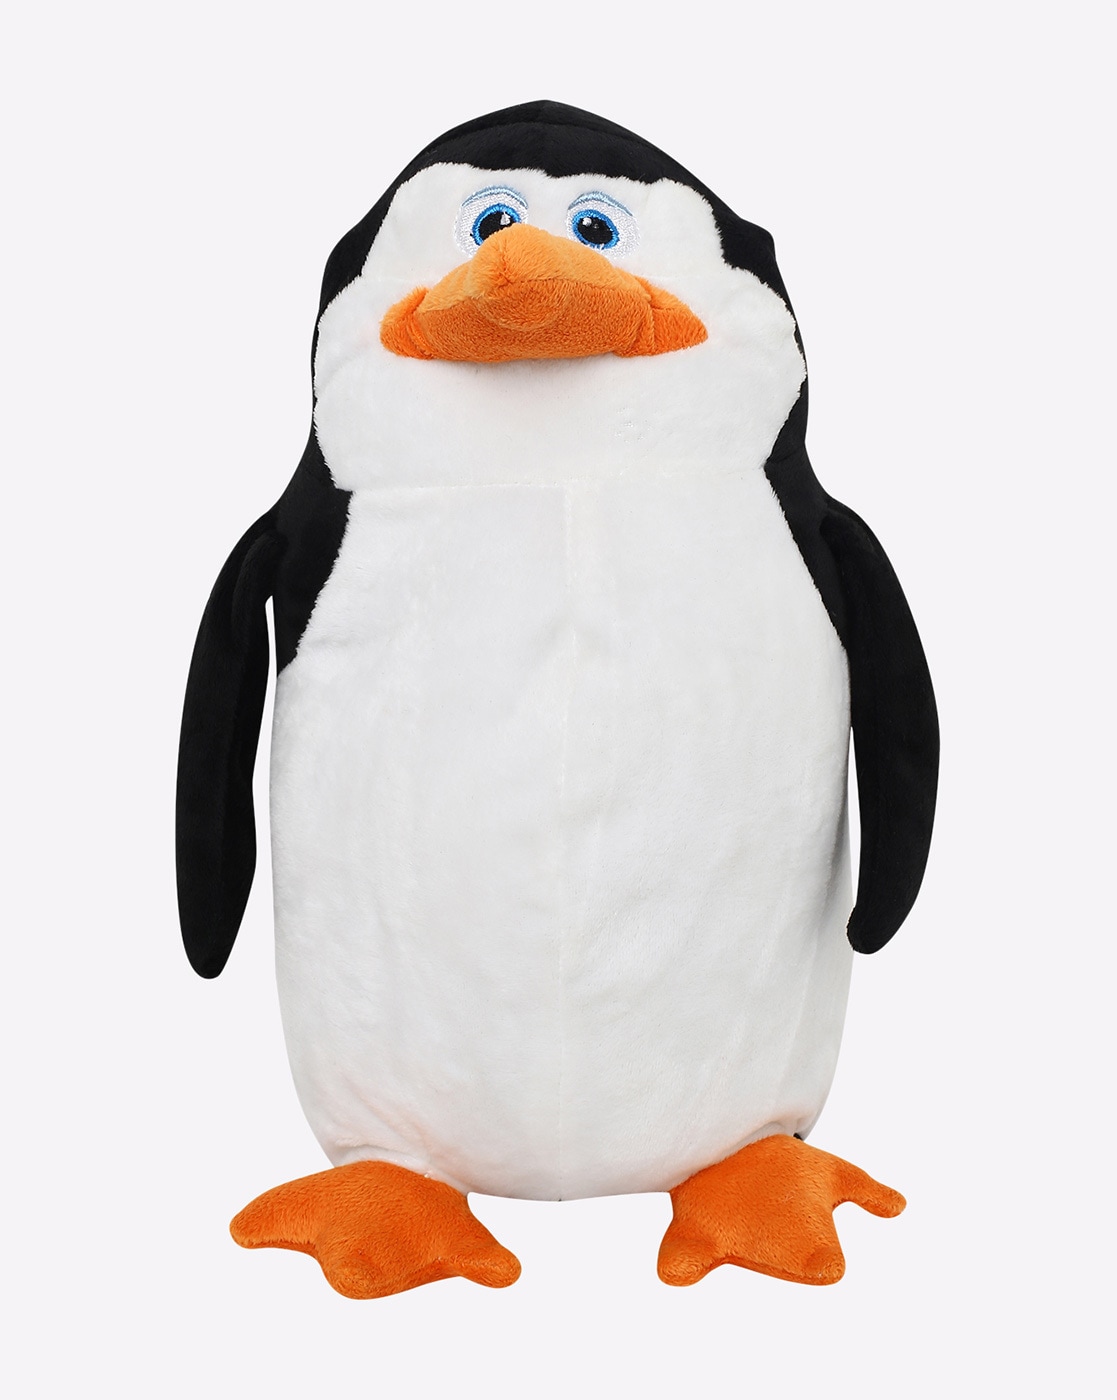 buy penguin soft toy